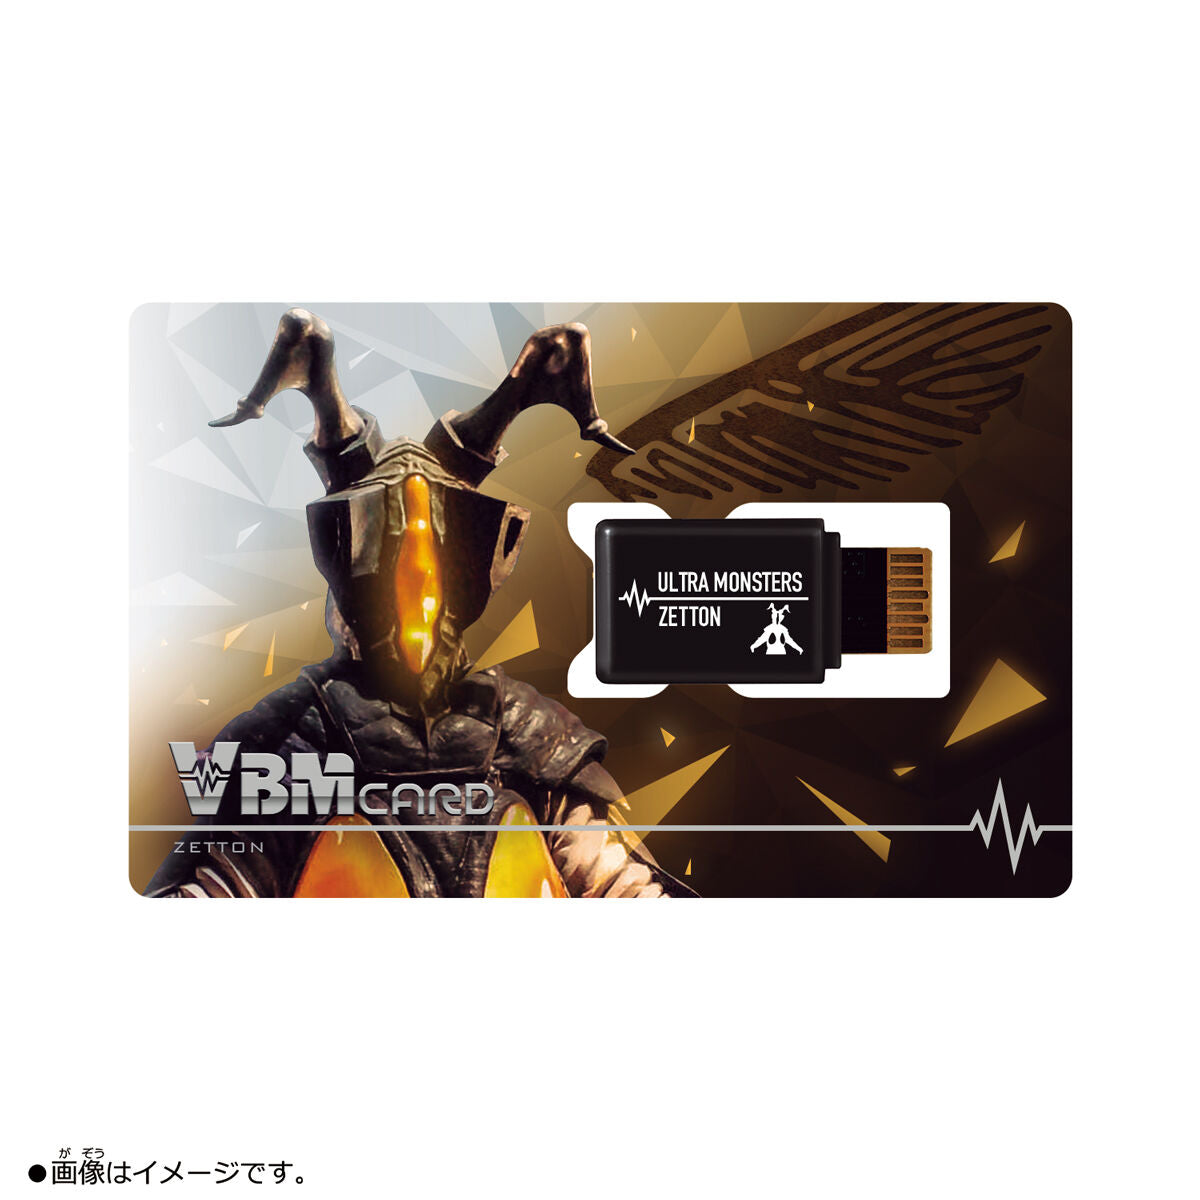 Ultraman VBM Card Set 01: Zero & Zetton